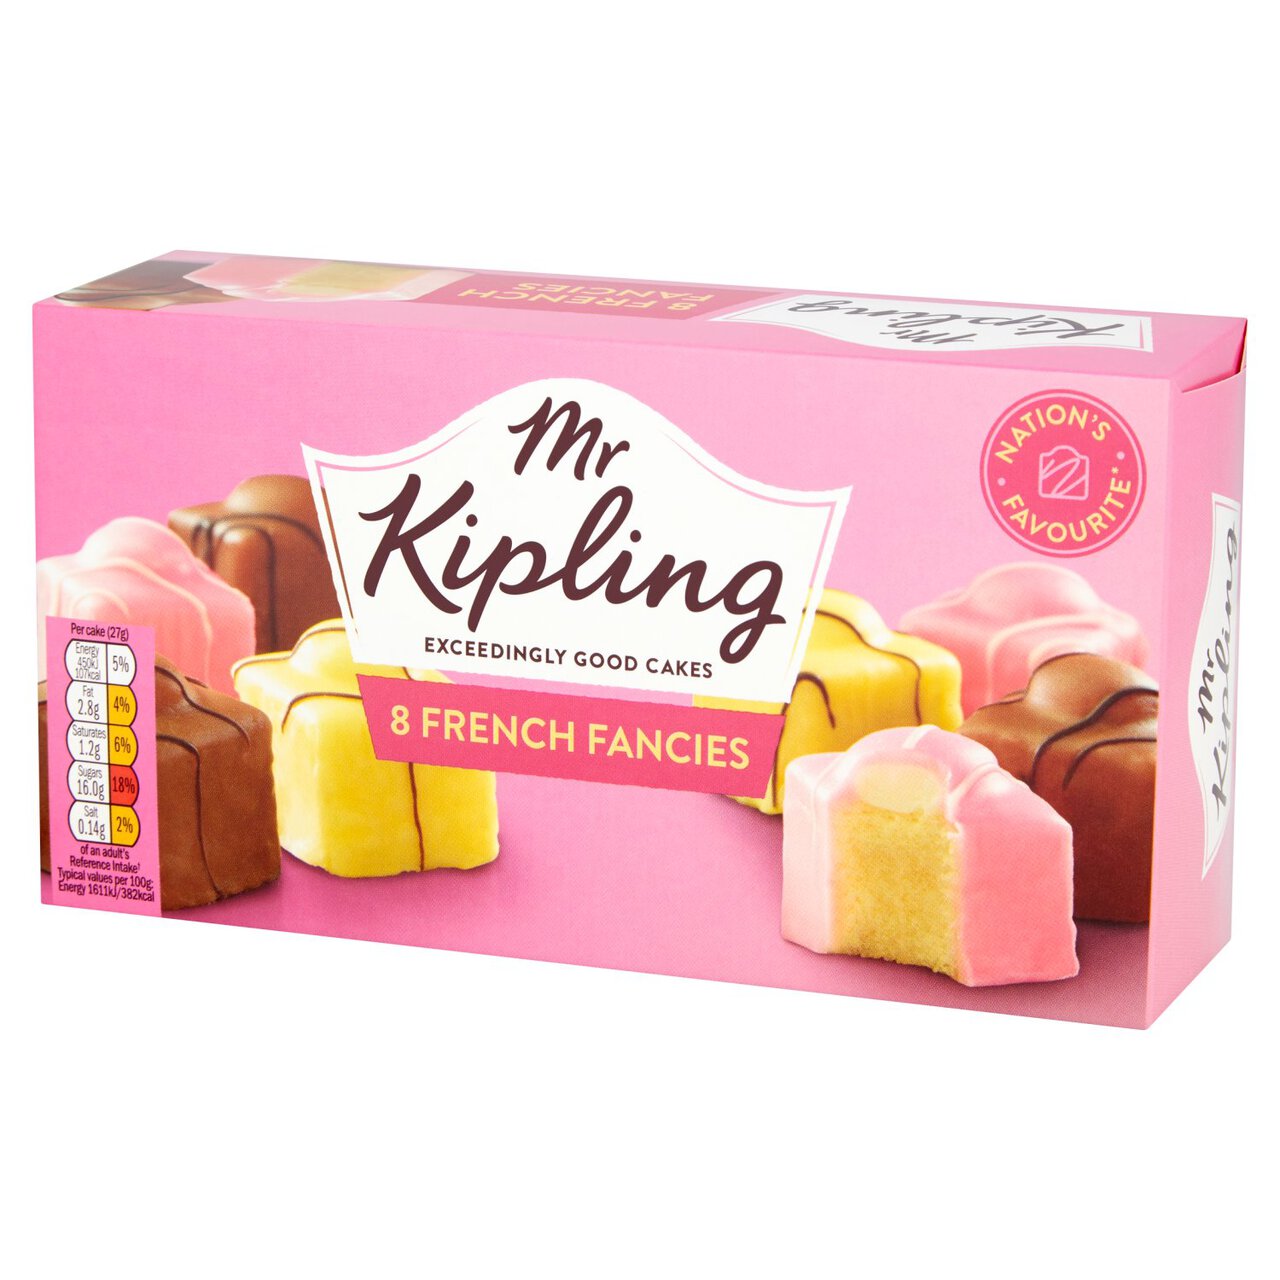 Mr Kipling French Fancies 8 per pack